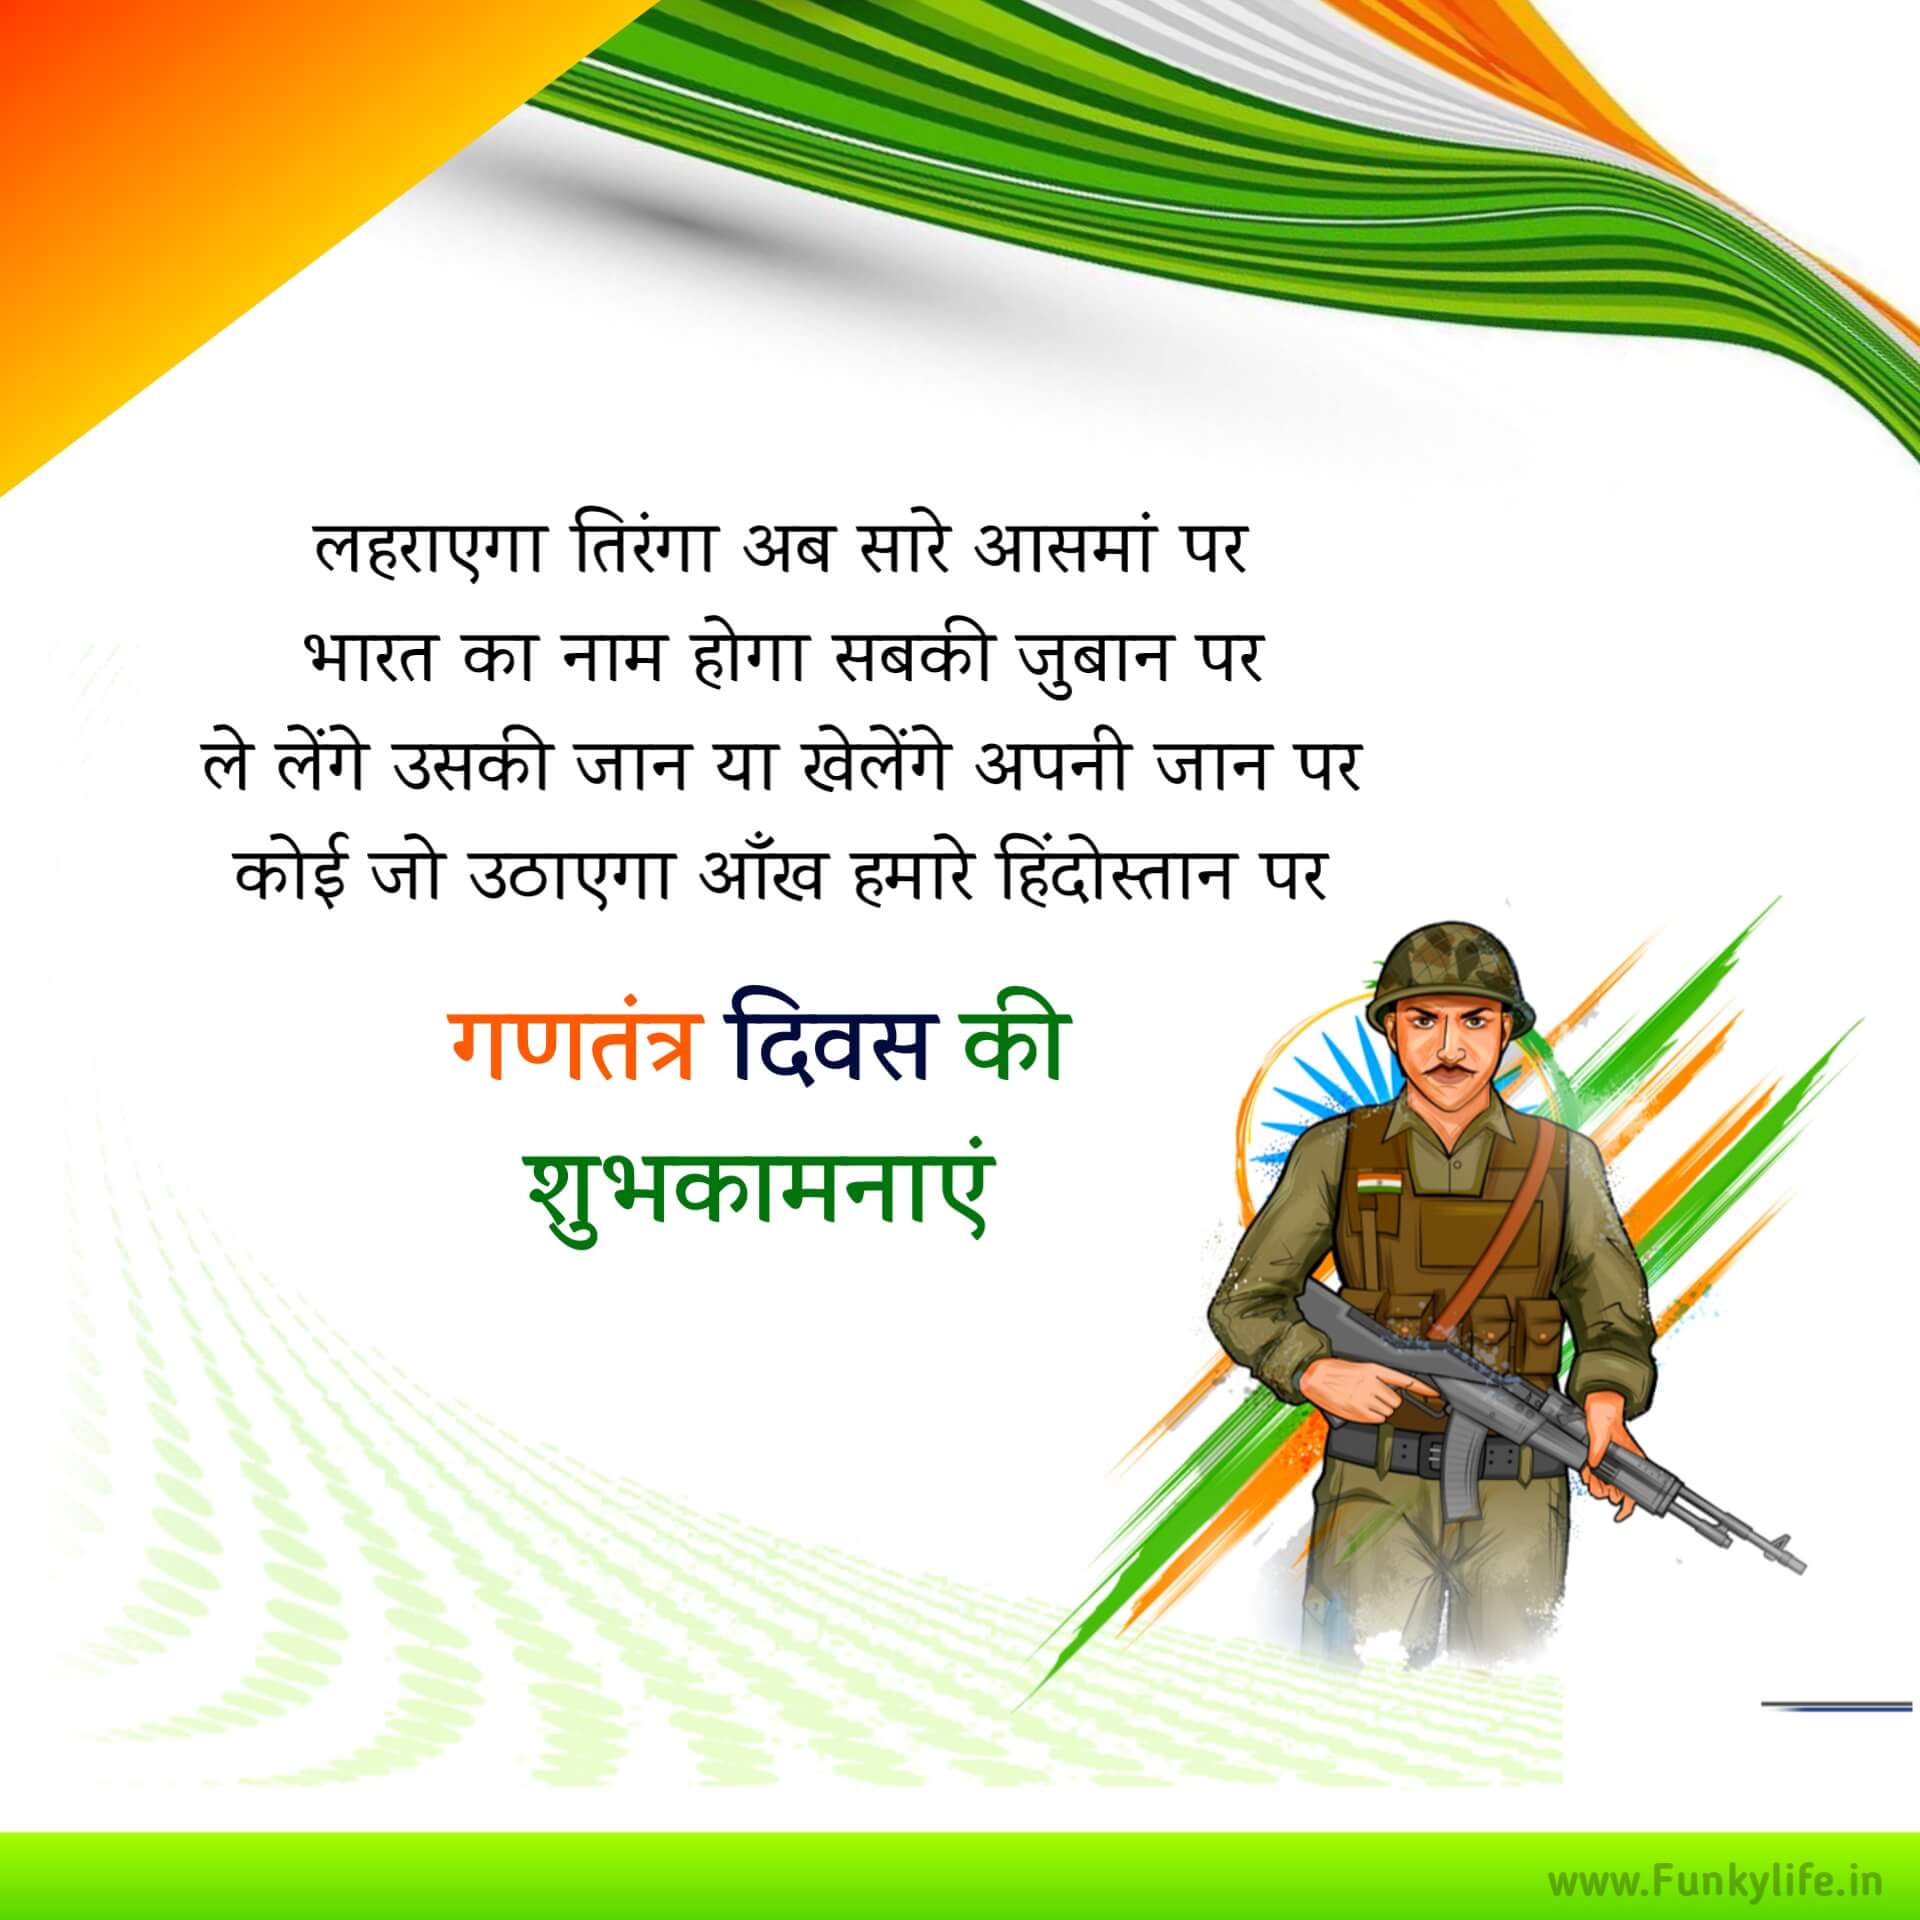 Status Republic Day Wishes in Hindi